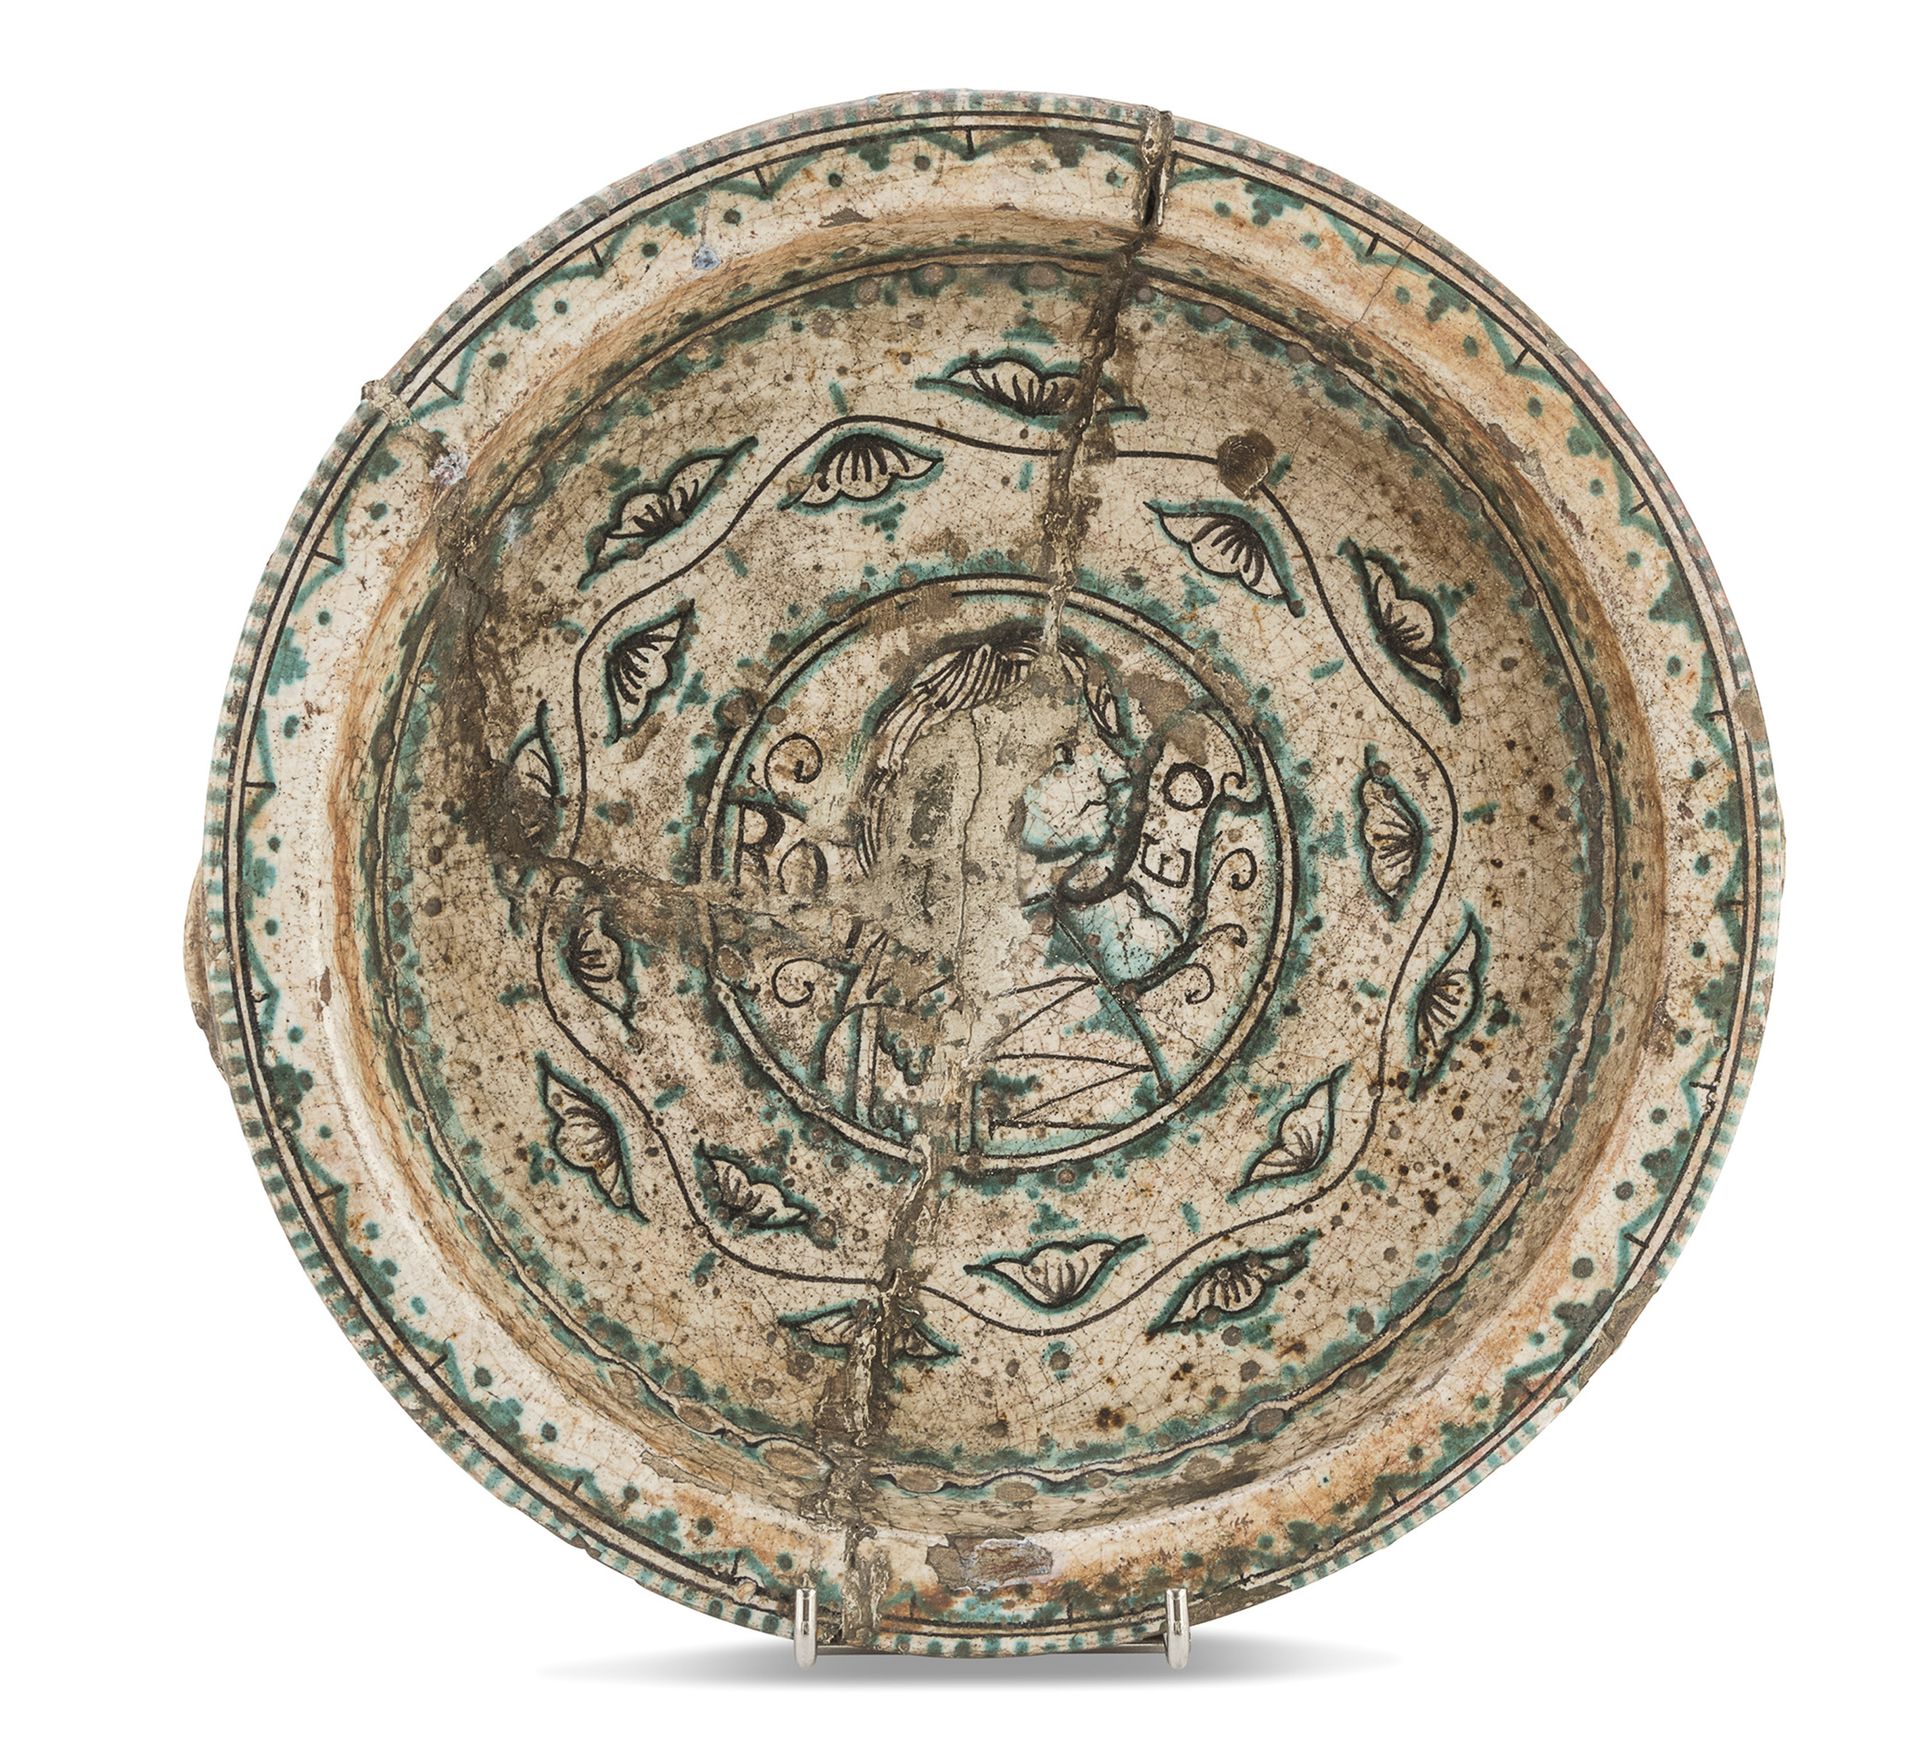 Null 双层马约里卡盘，奥维多 十八世纪

中世纪风格，多色的女性轮廓装饰，帽檐上有几何装饰。

尺寸为4 x 25.5 x 27厘米。

根据碎片重建。